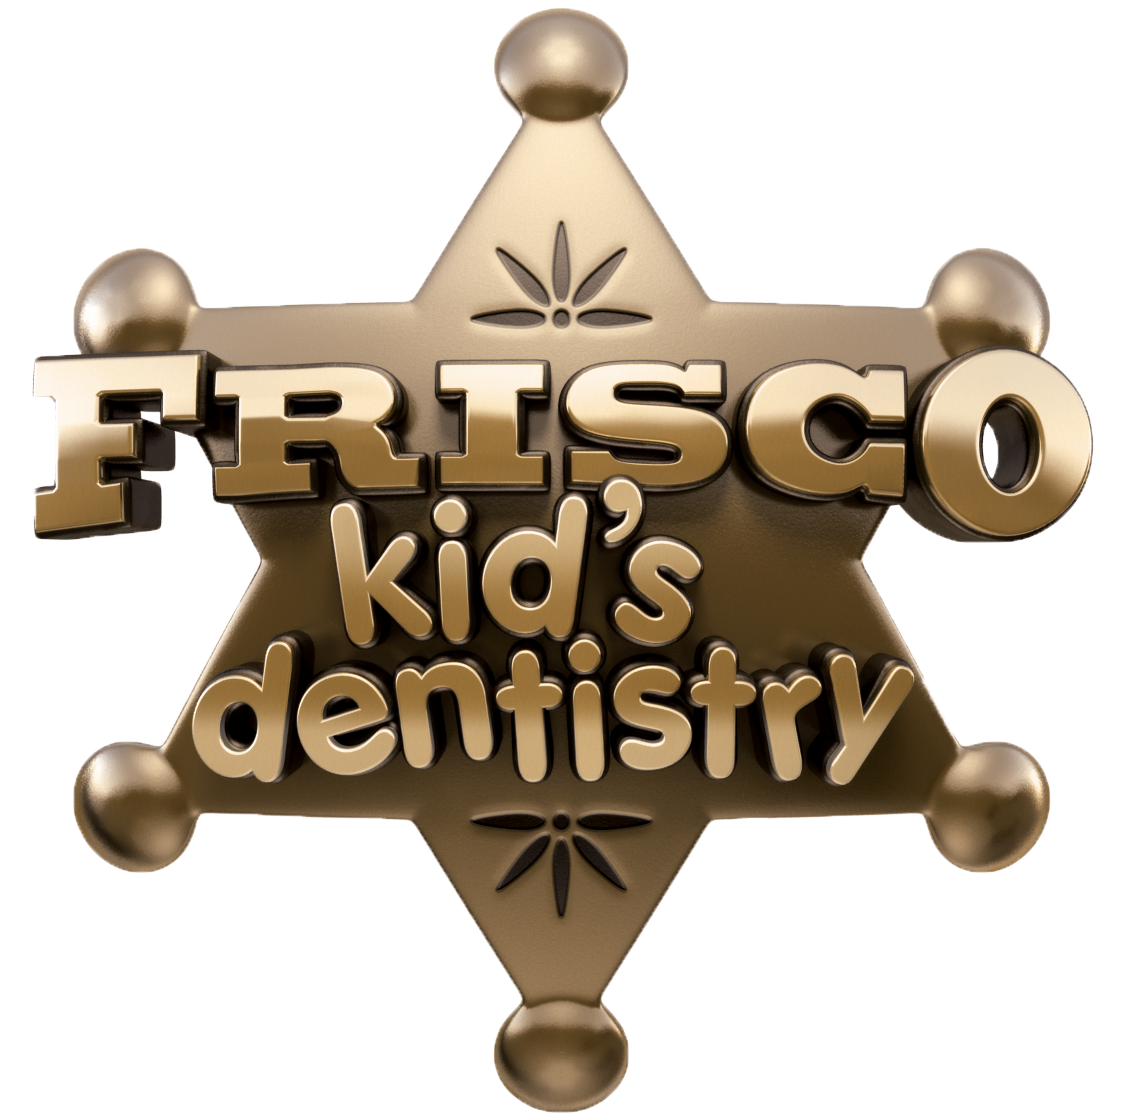 Dr. Paul I Rubin, DDS - Frisco Kid’s Dentistry - Frisco Pediatric Dentist